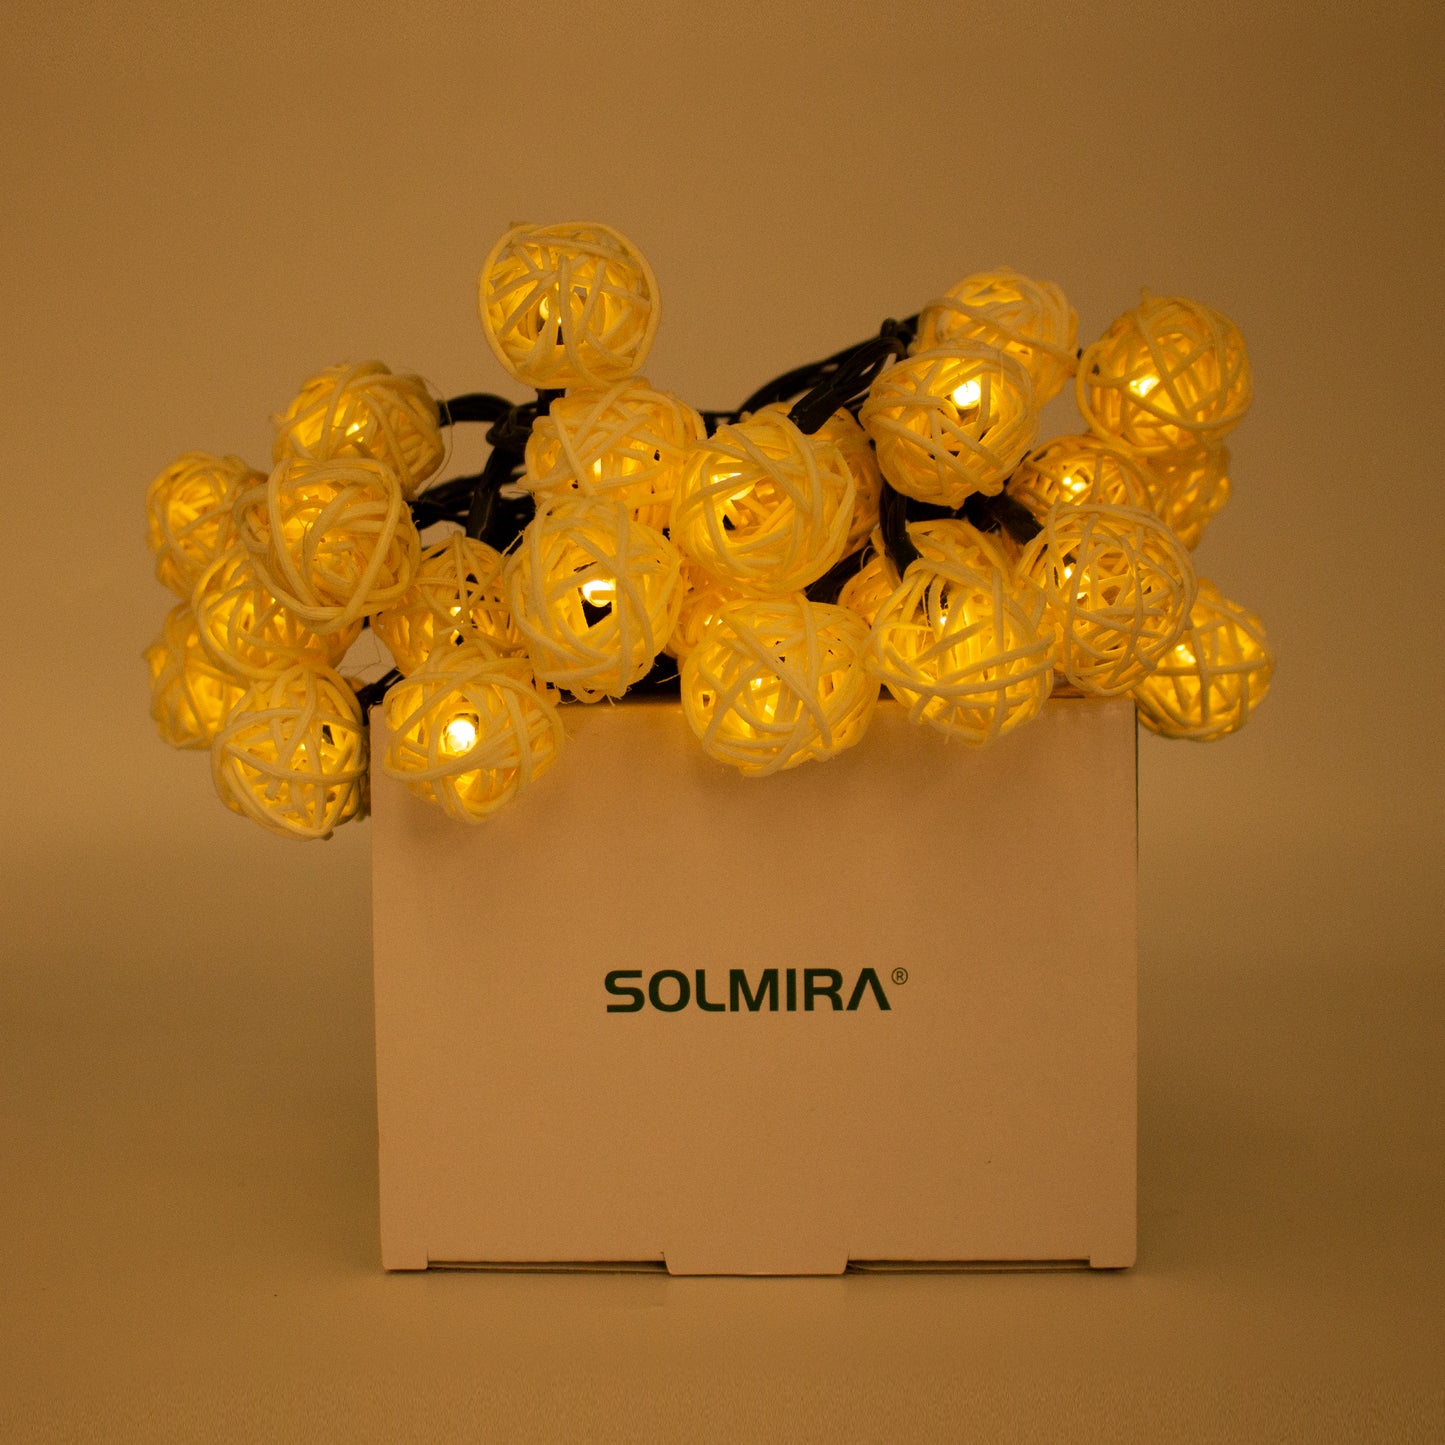 SOLMIRA® Luces Solares LED de Exterior, Forma de Pelota de Ratán, 30 LEDs Cálidas, 8 Modos, Certificado CE y RoHS